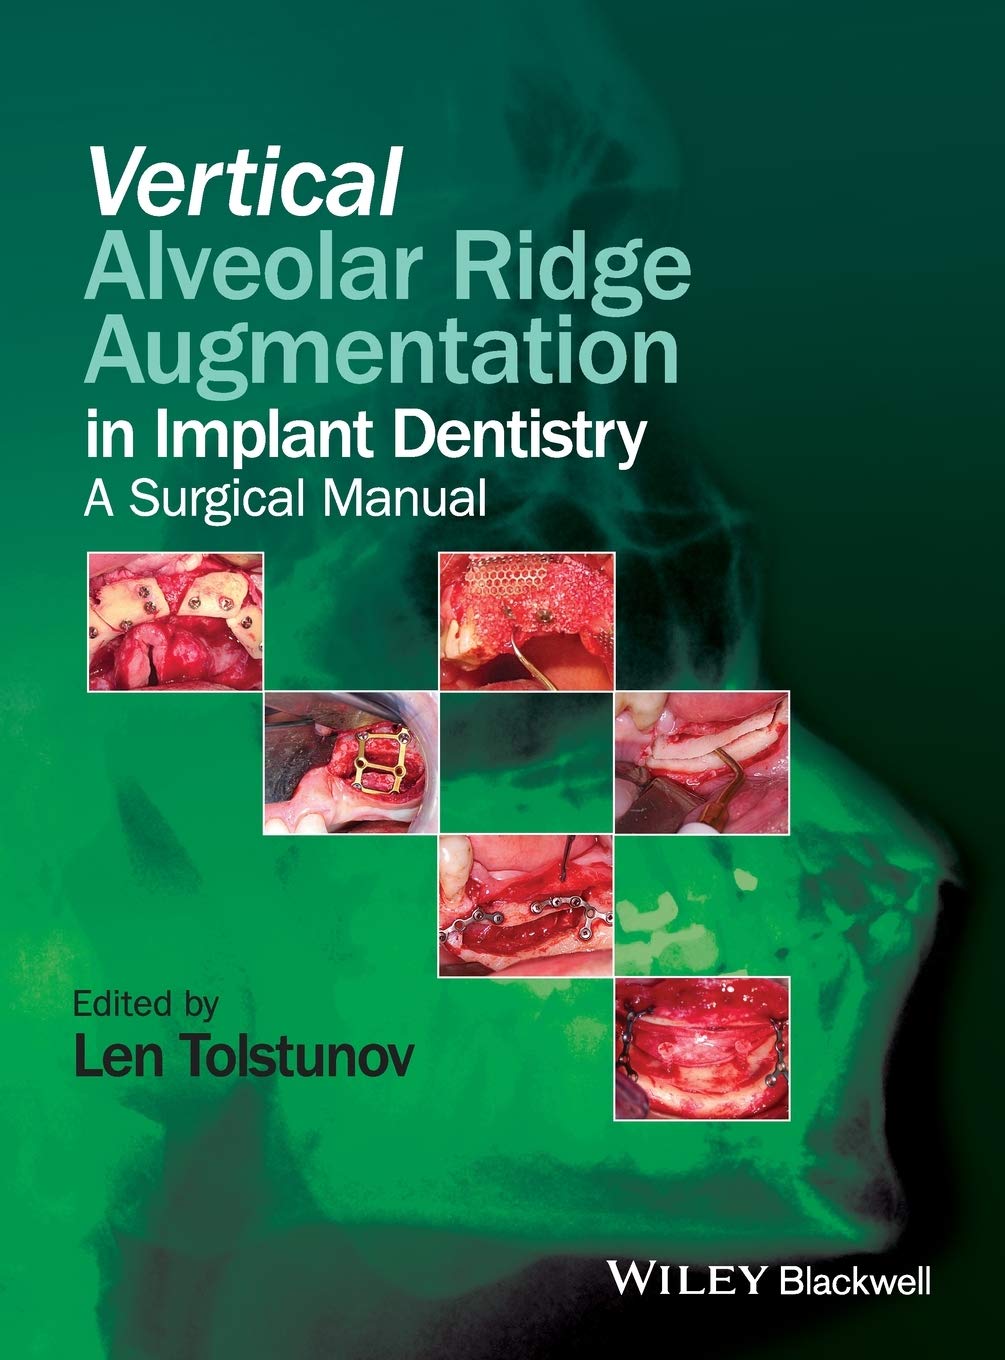 Vertical Alveolar Ridge Augmentation Of The Alveolar Ridge In Implant Dentistry